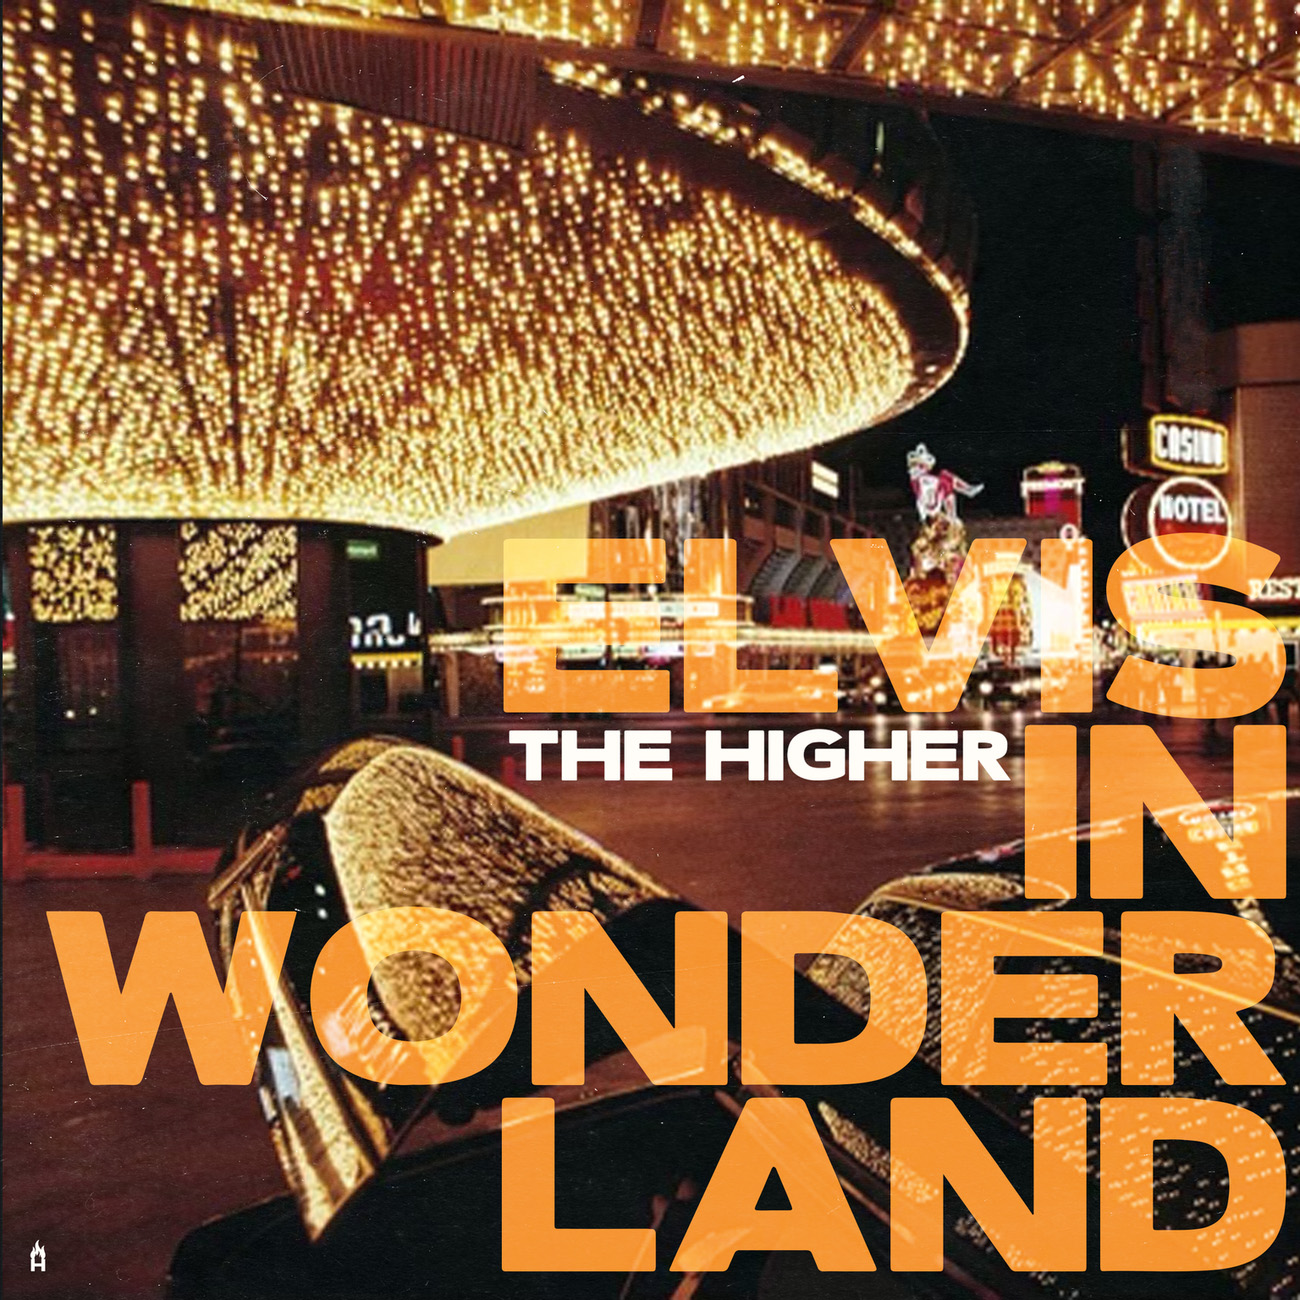 The Higher - Elvis In Wonderland